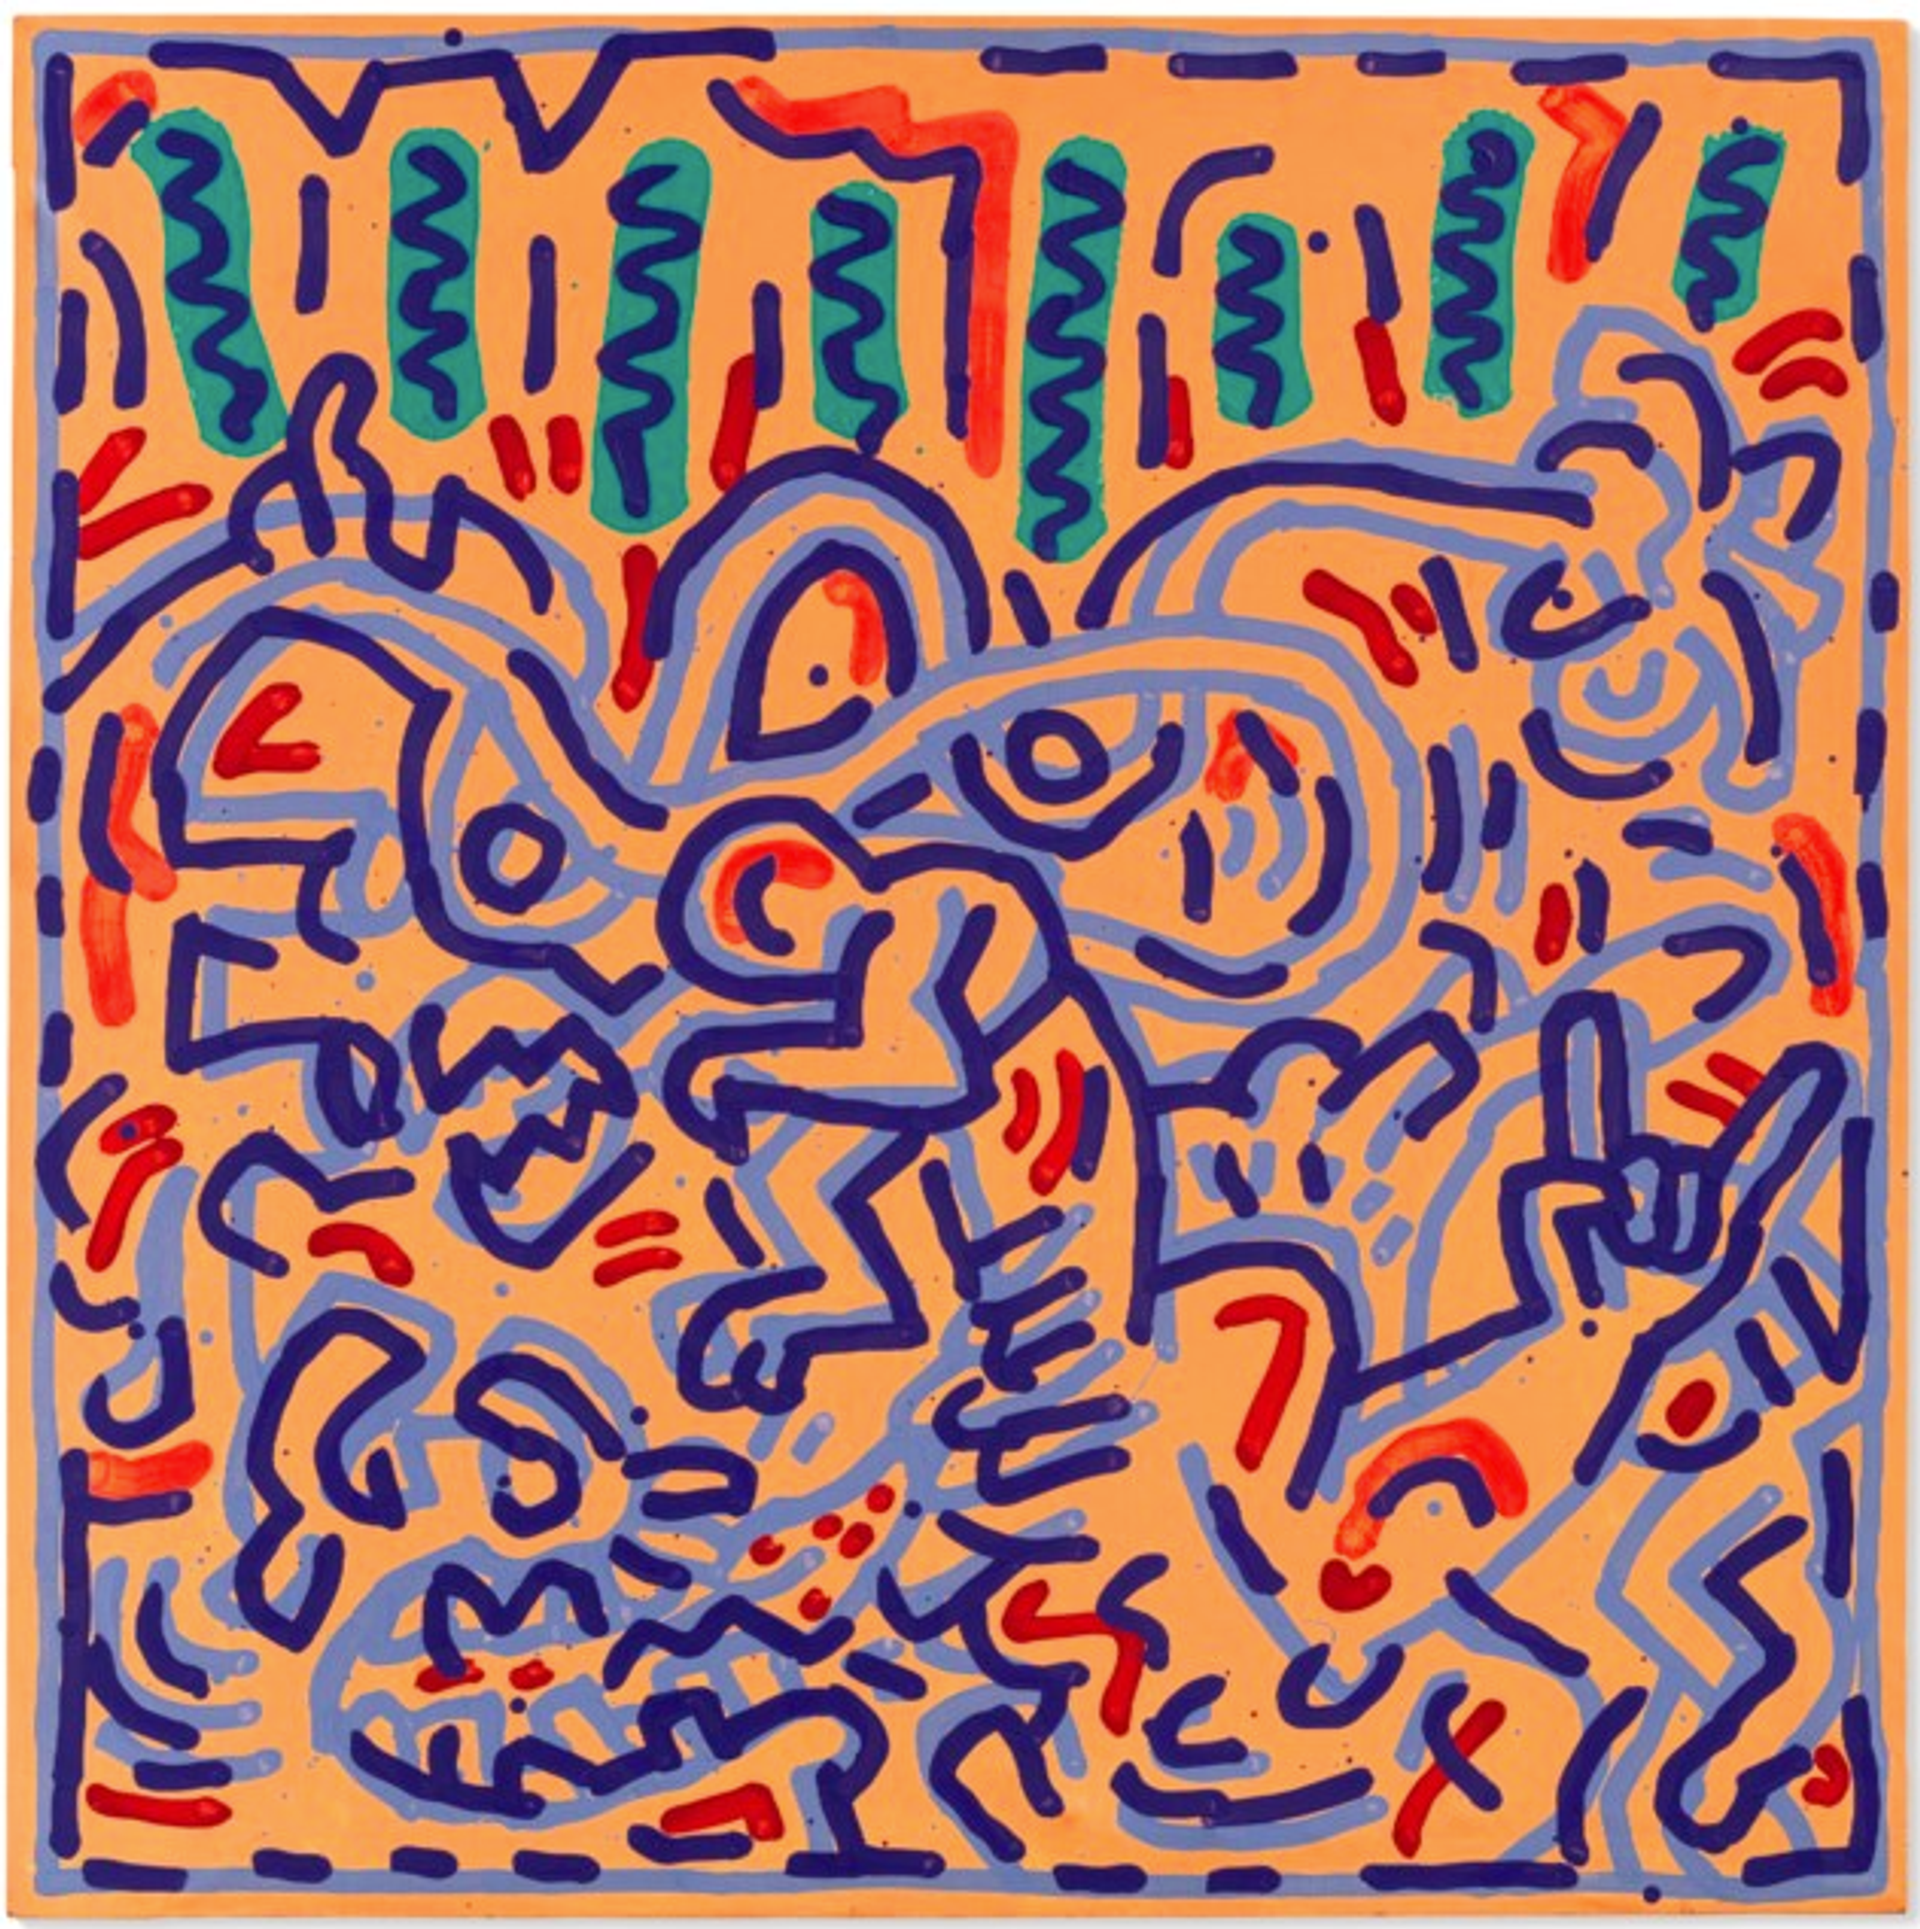 Untitled by Keith Haring - MyArtBroker 